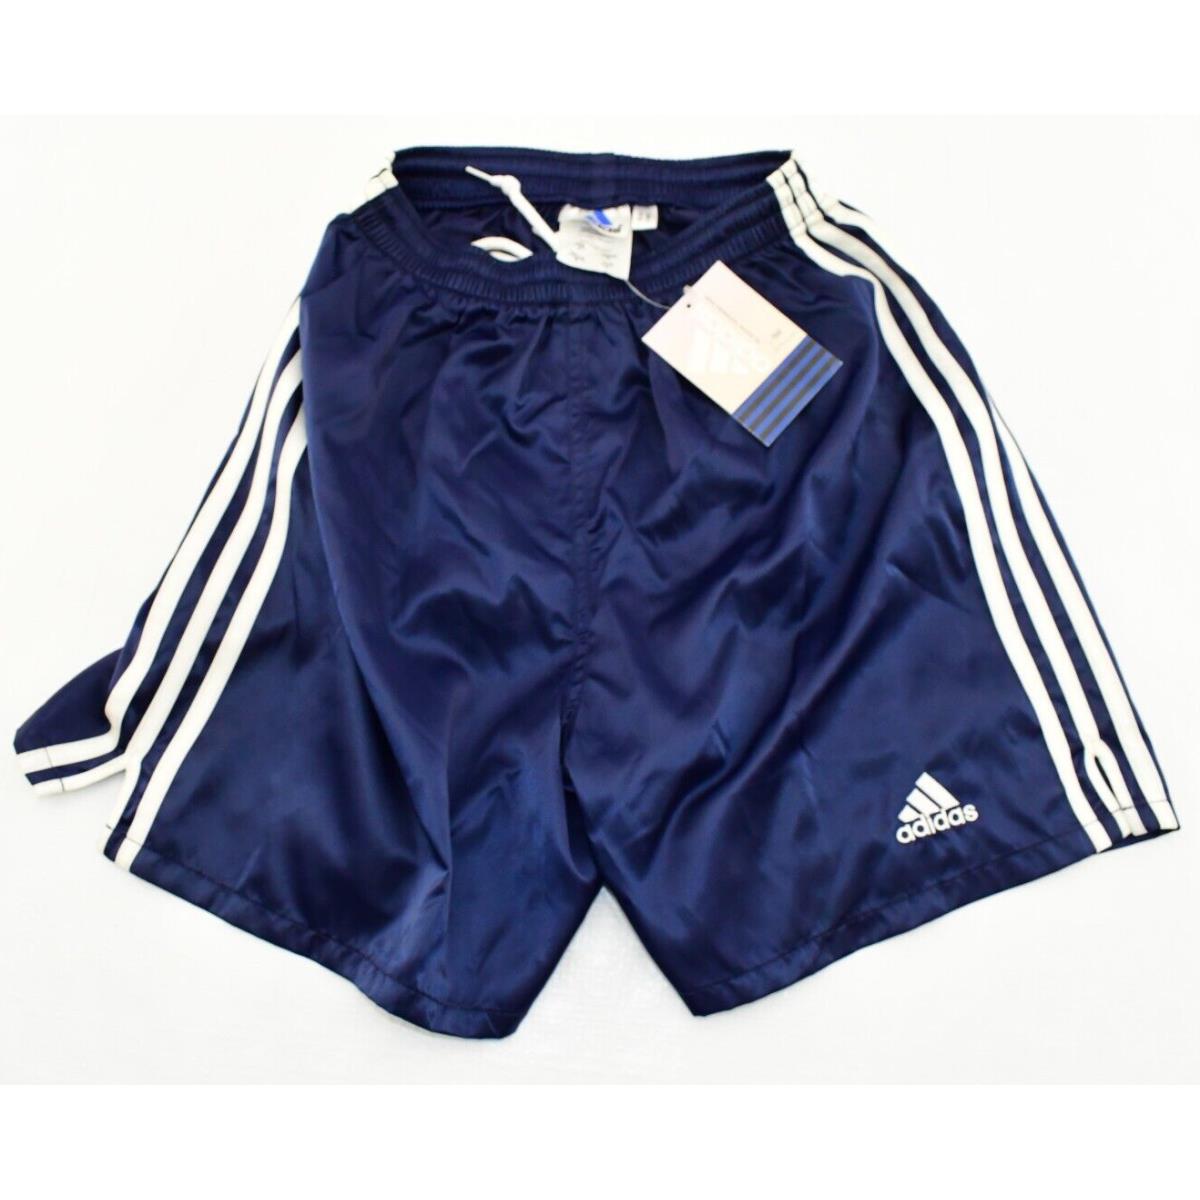 Vintage 1998 Retro Adidas Soccer Shorts - S - Navy Blue Hot Shot Lisbon Satin